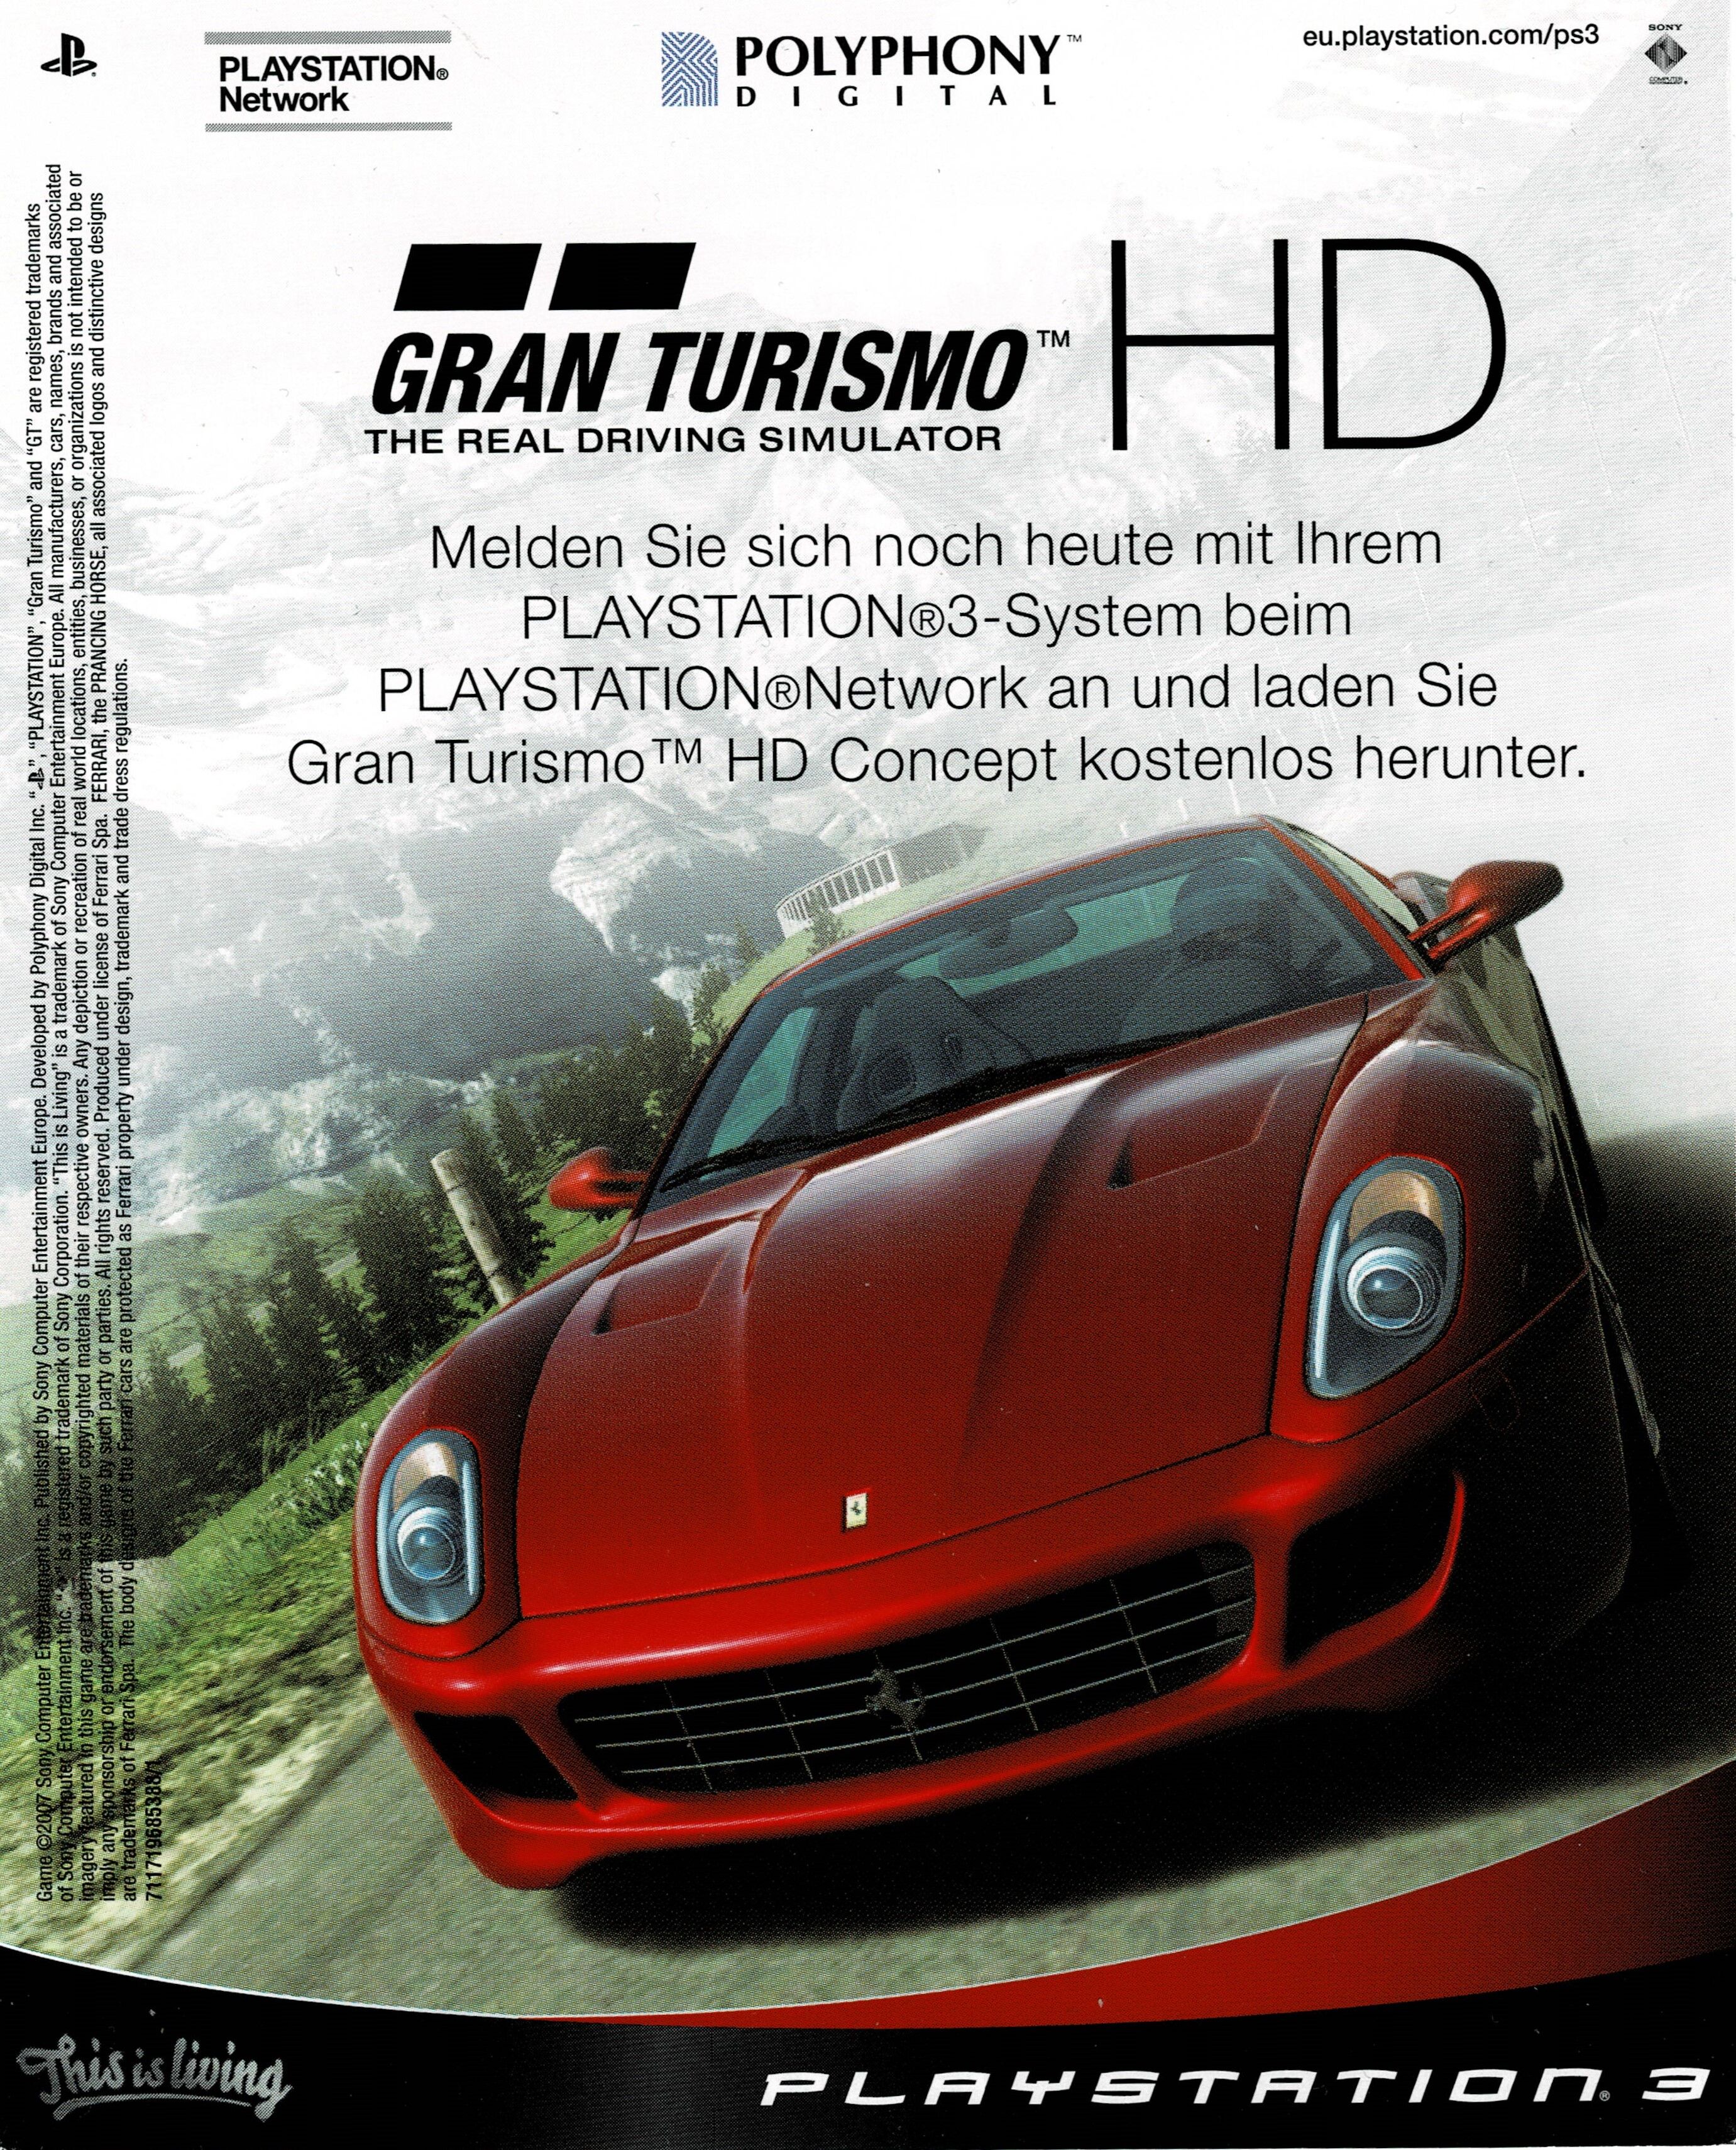 Gran Turismo 4 Prologue Demos/Content, Gran Turismo Wiki